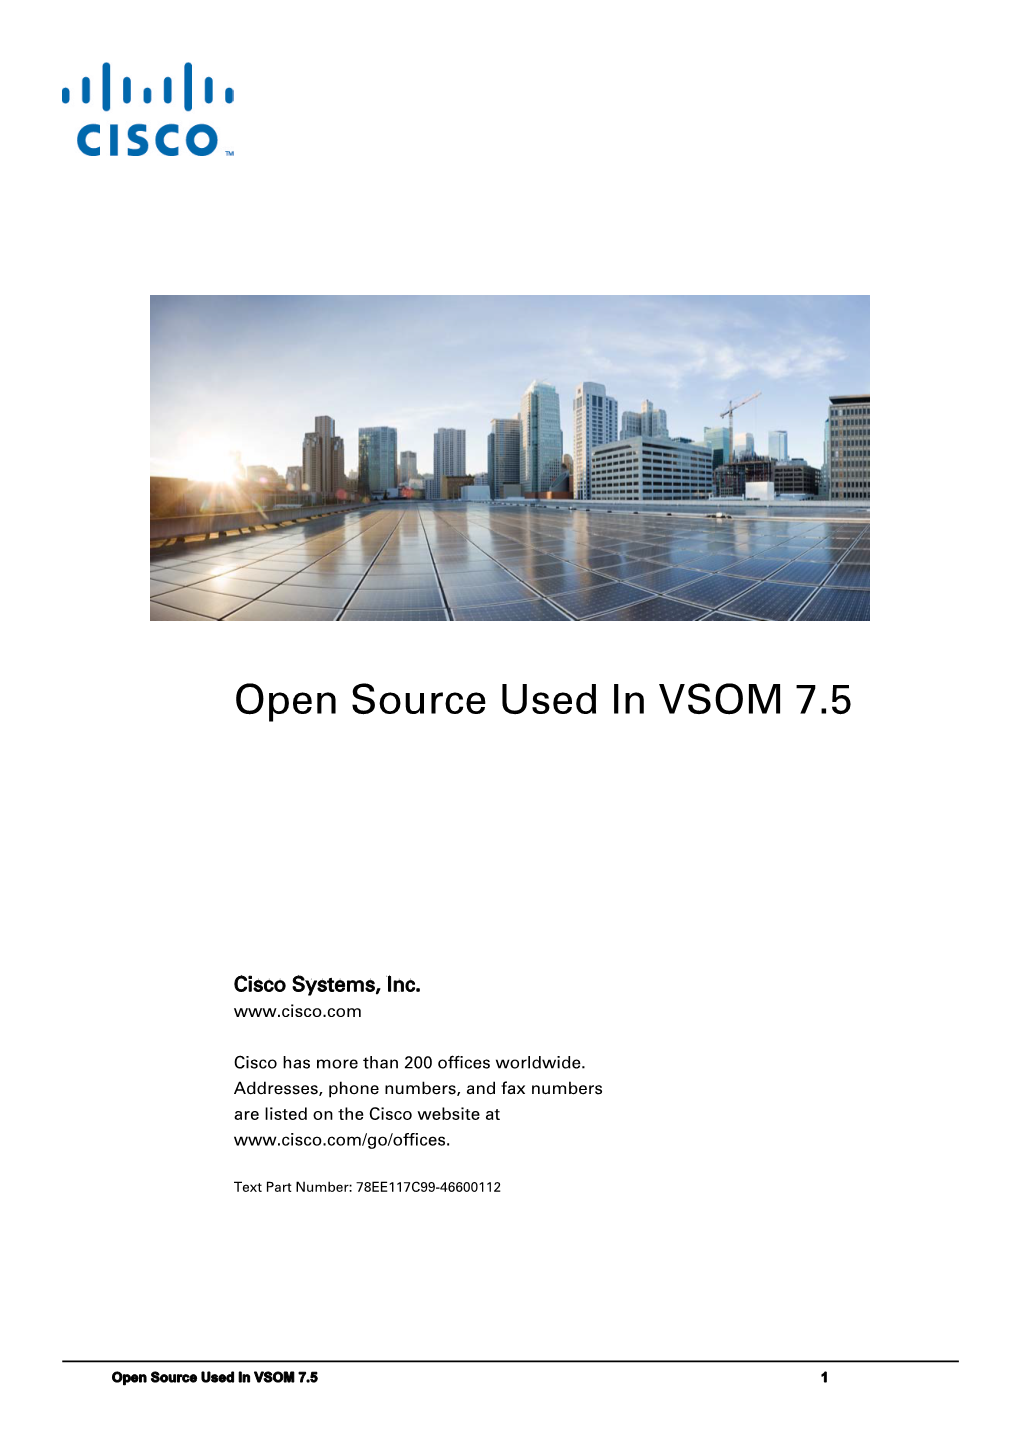 Open Source Used in VSOM 7.5